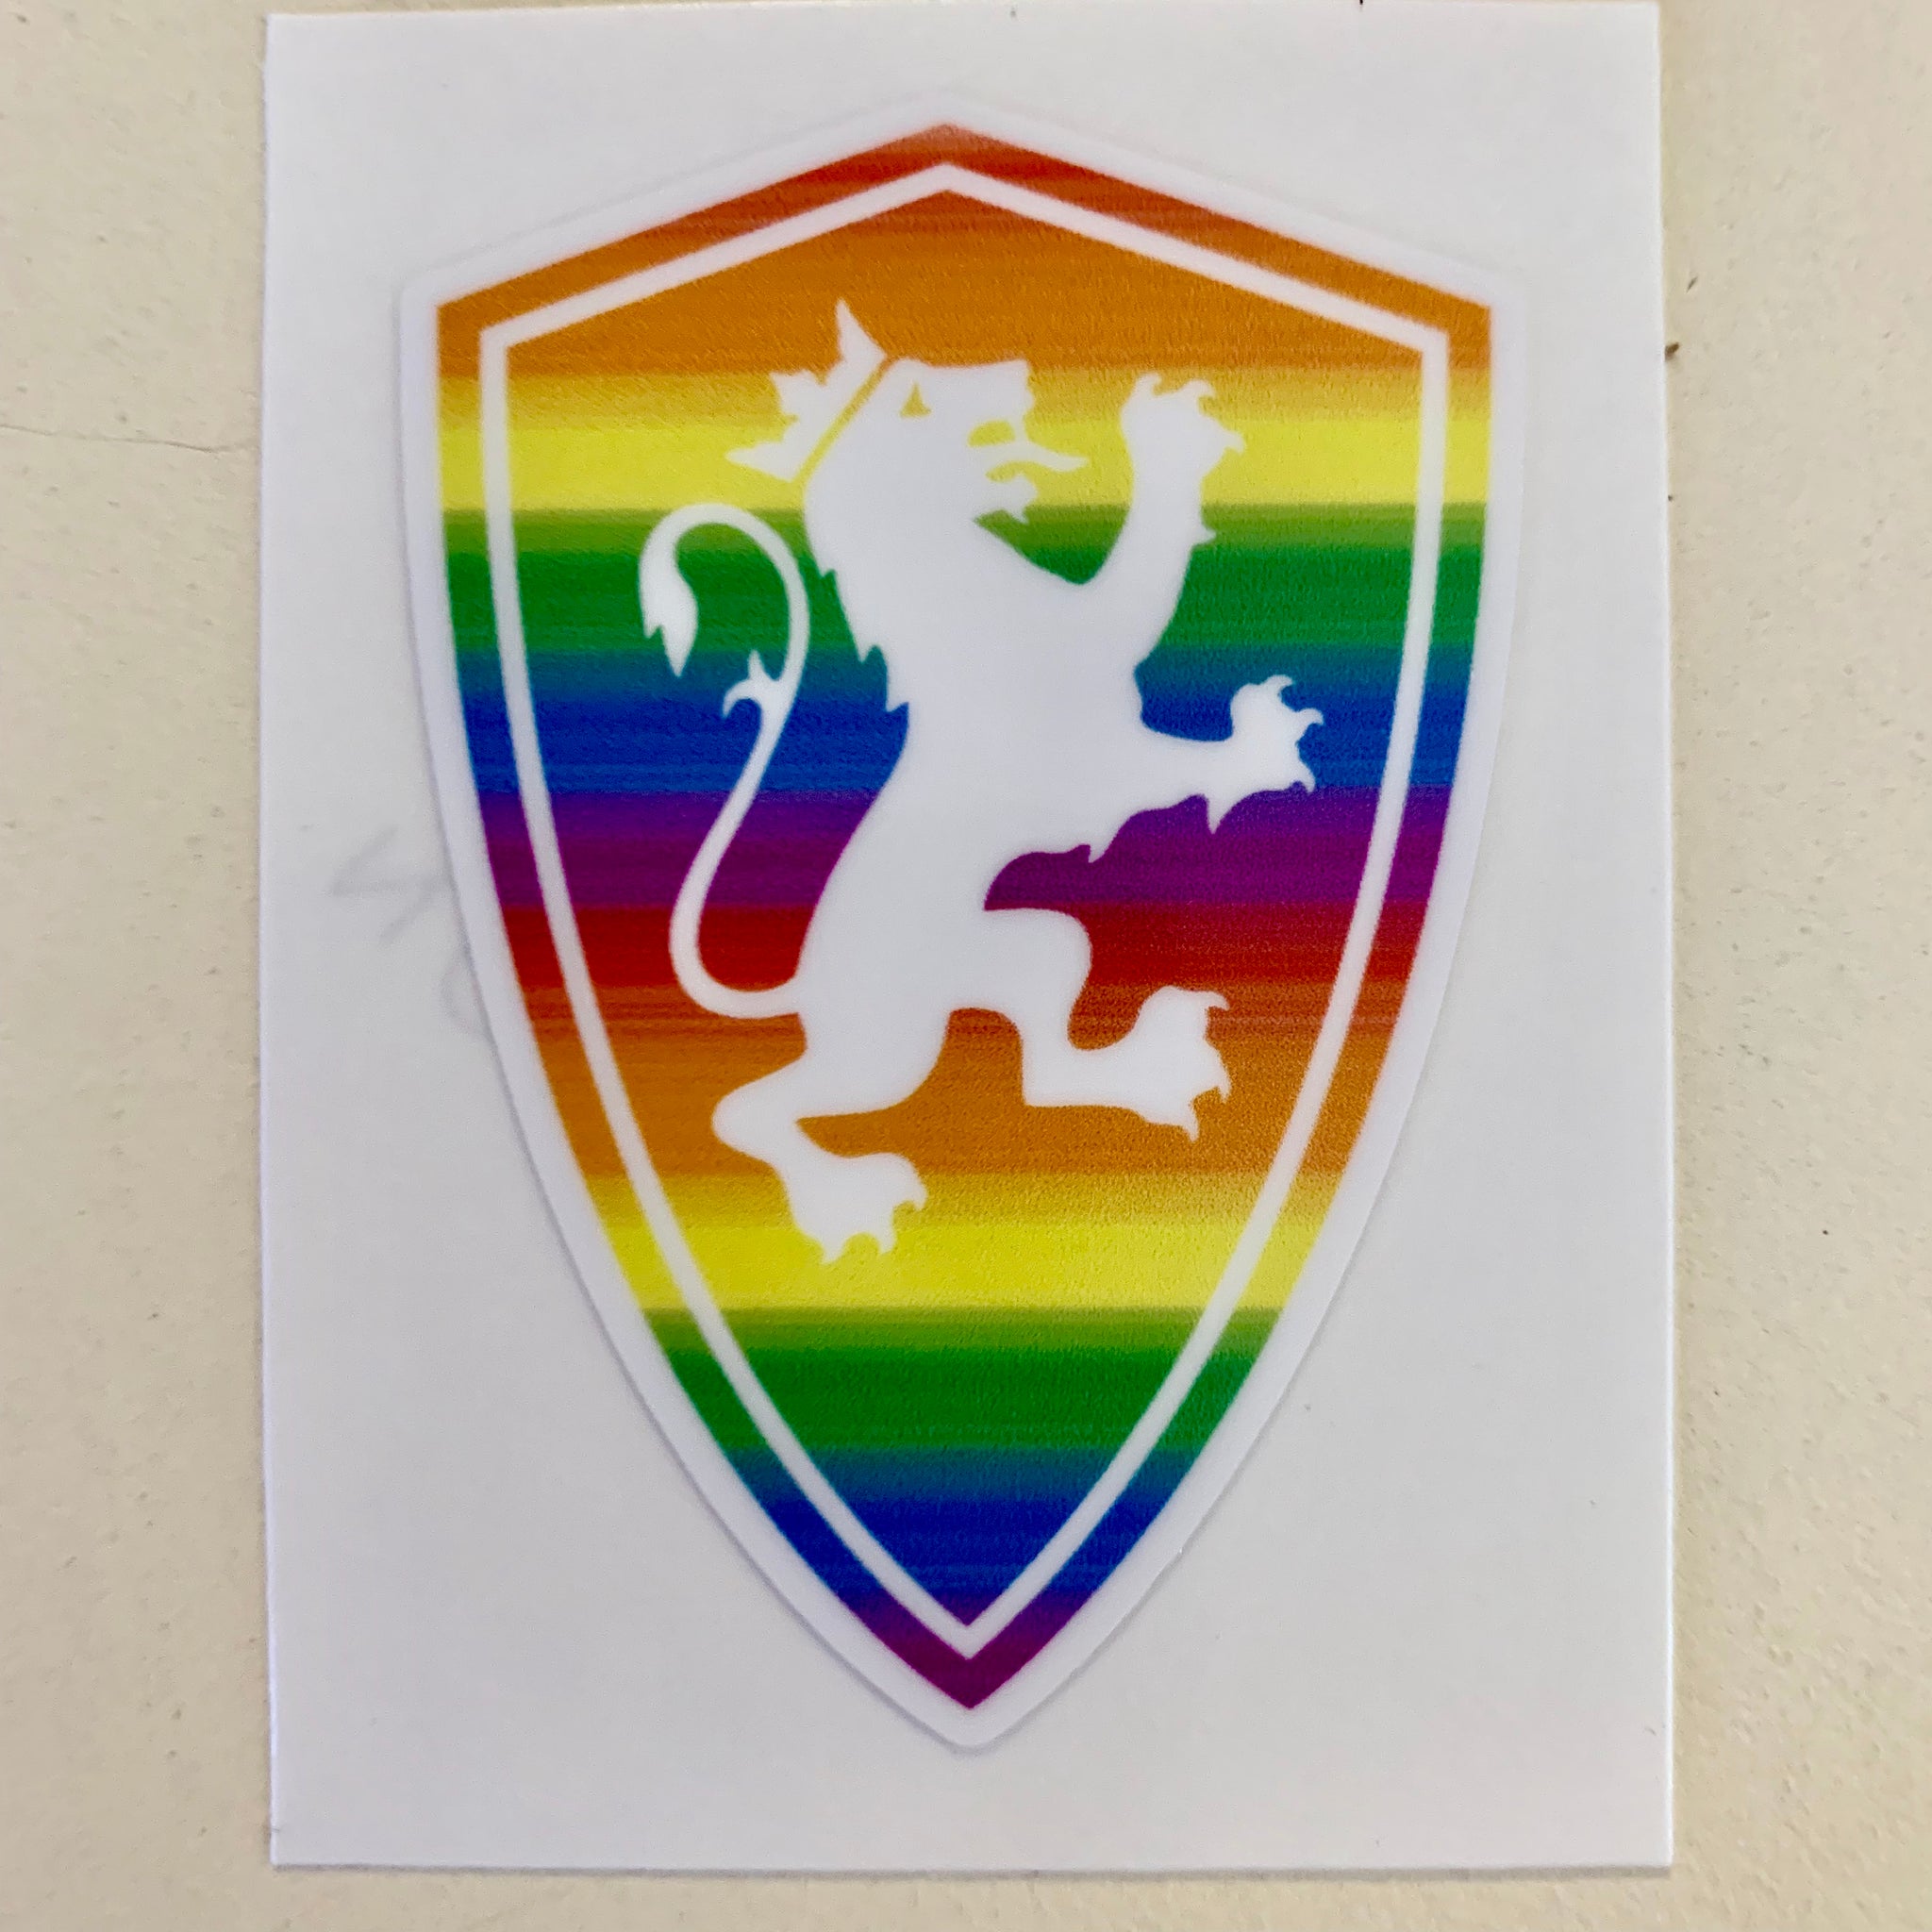 Flagler rainbow shield logo sticker